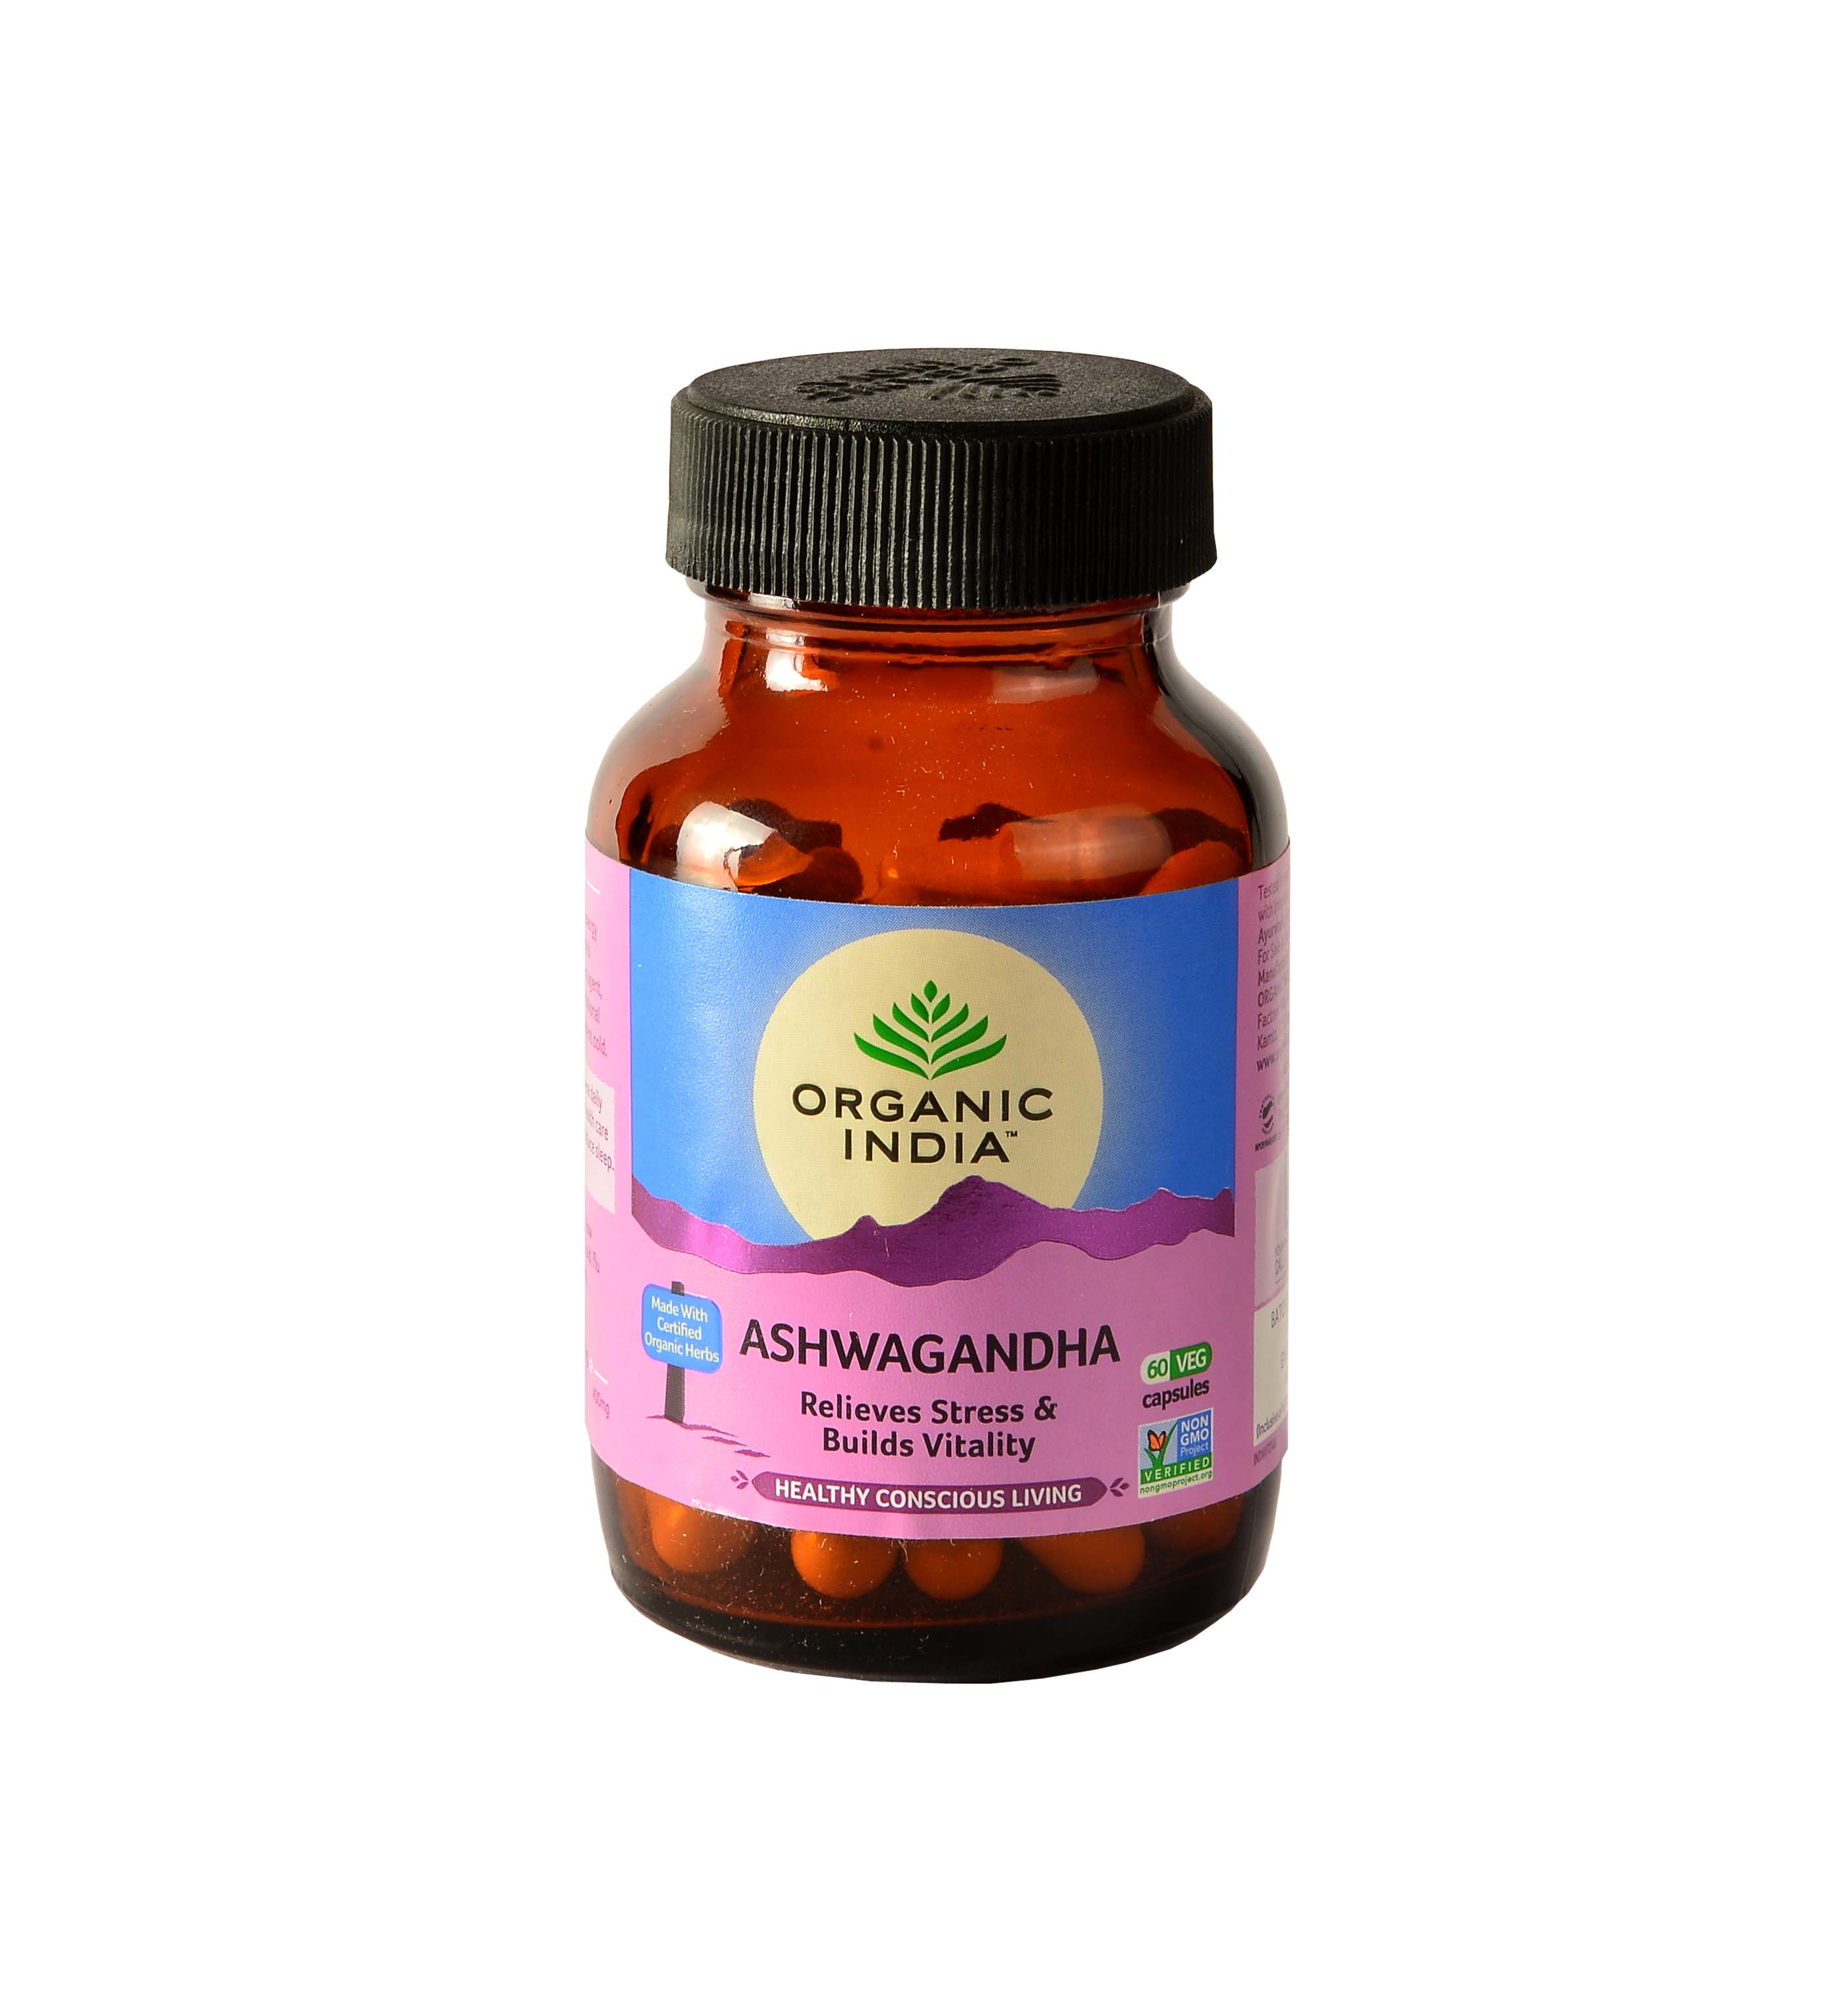 Buy Organic India Ashwagandha Capsule at Best Price Online